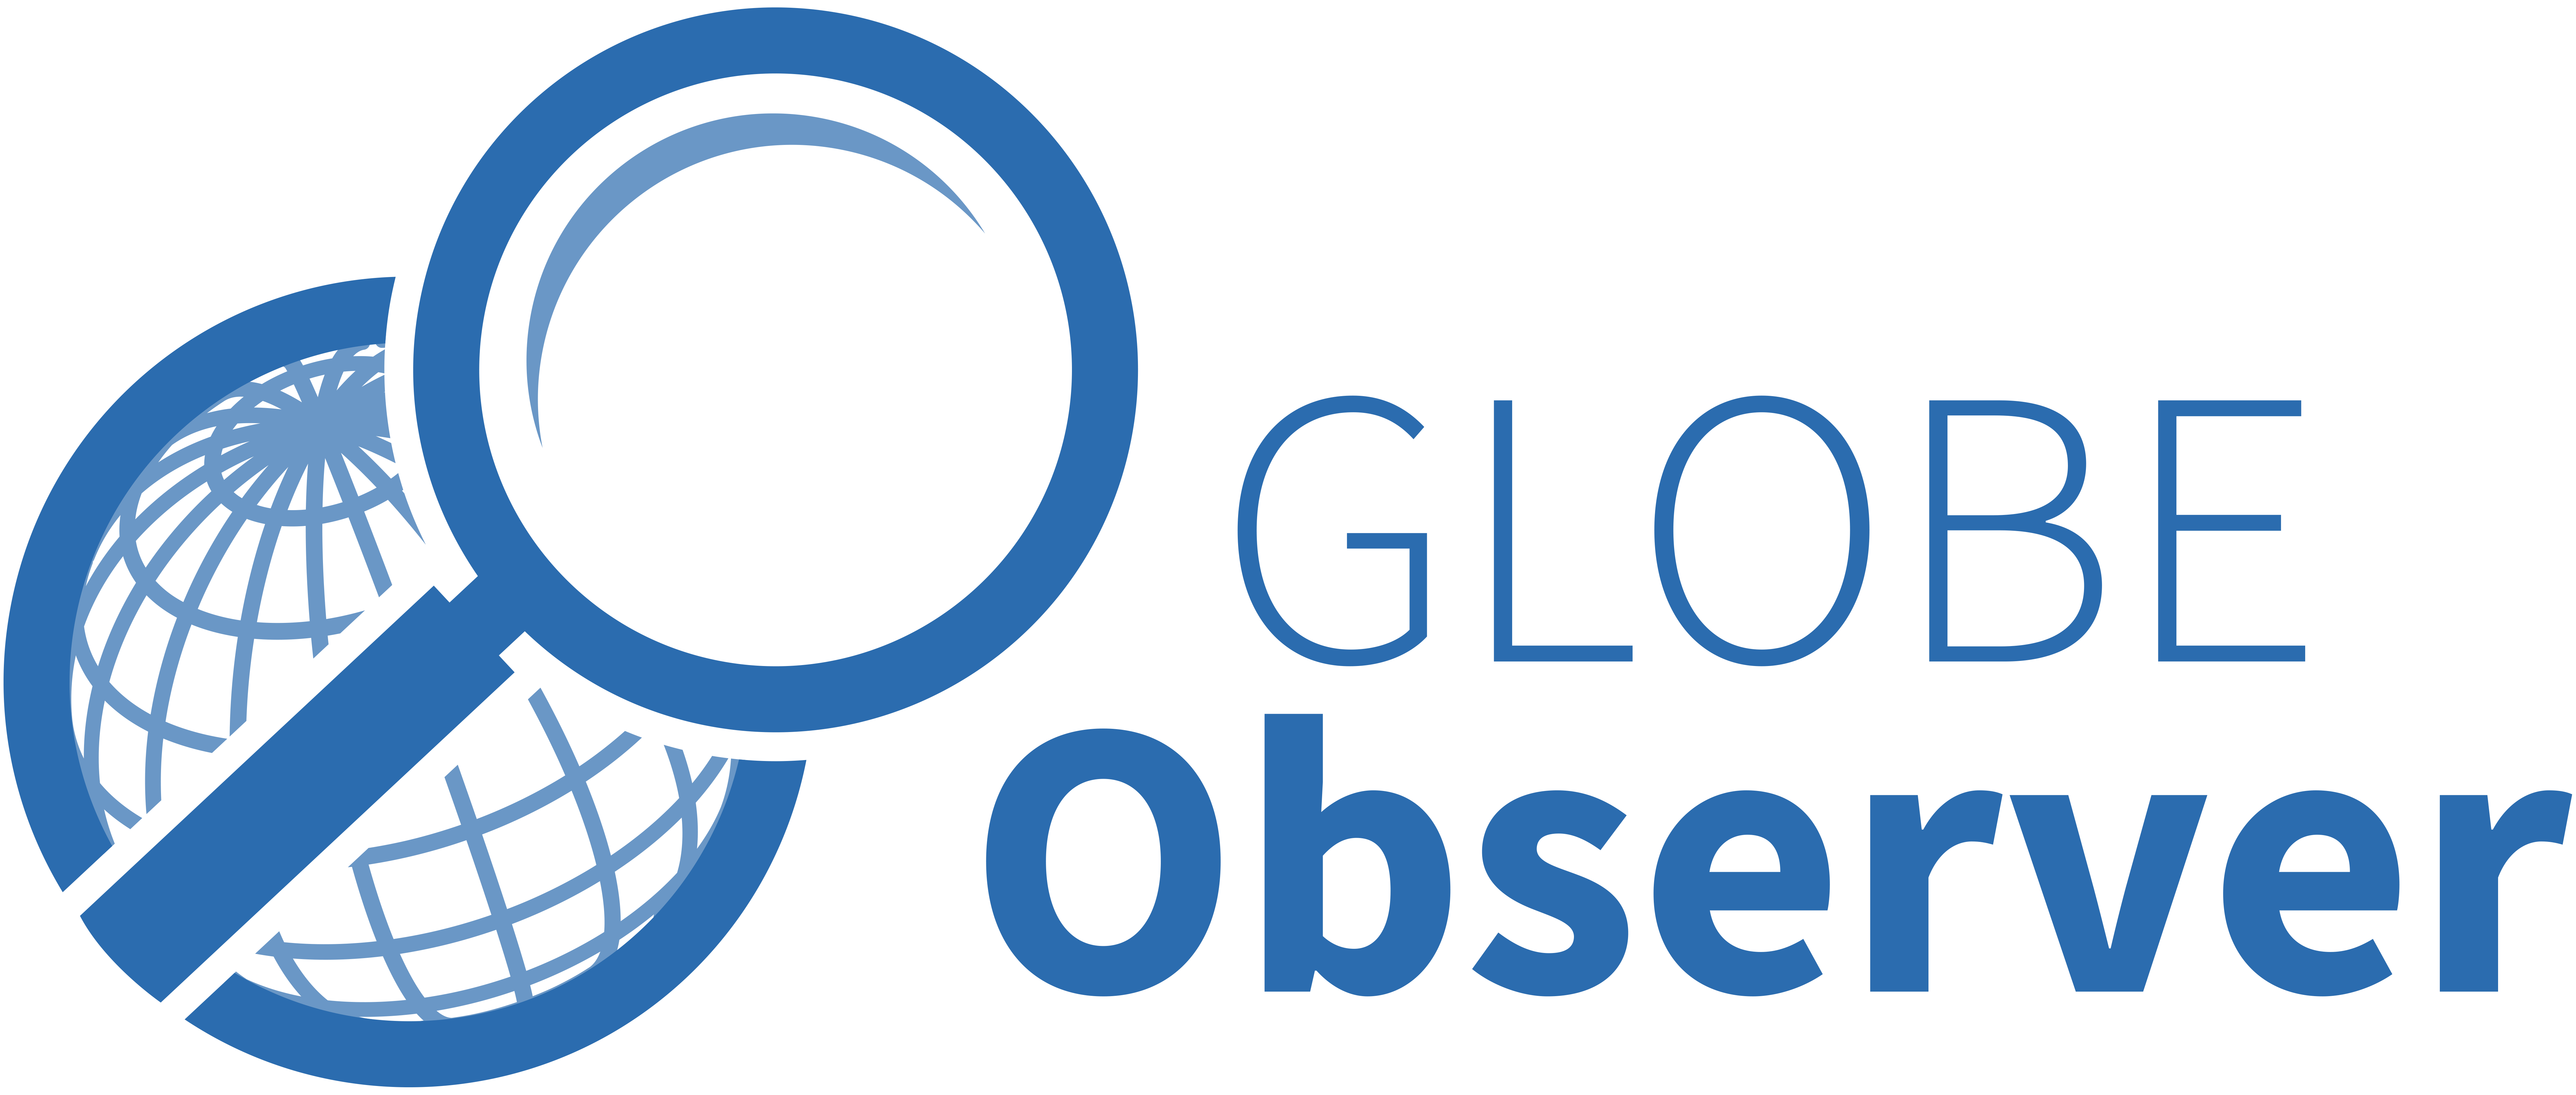 The logo of The GLOBE Program's app, GLOBE Observer